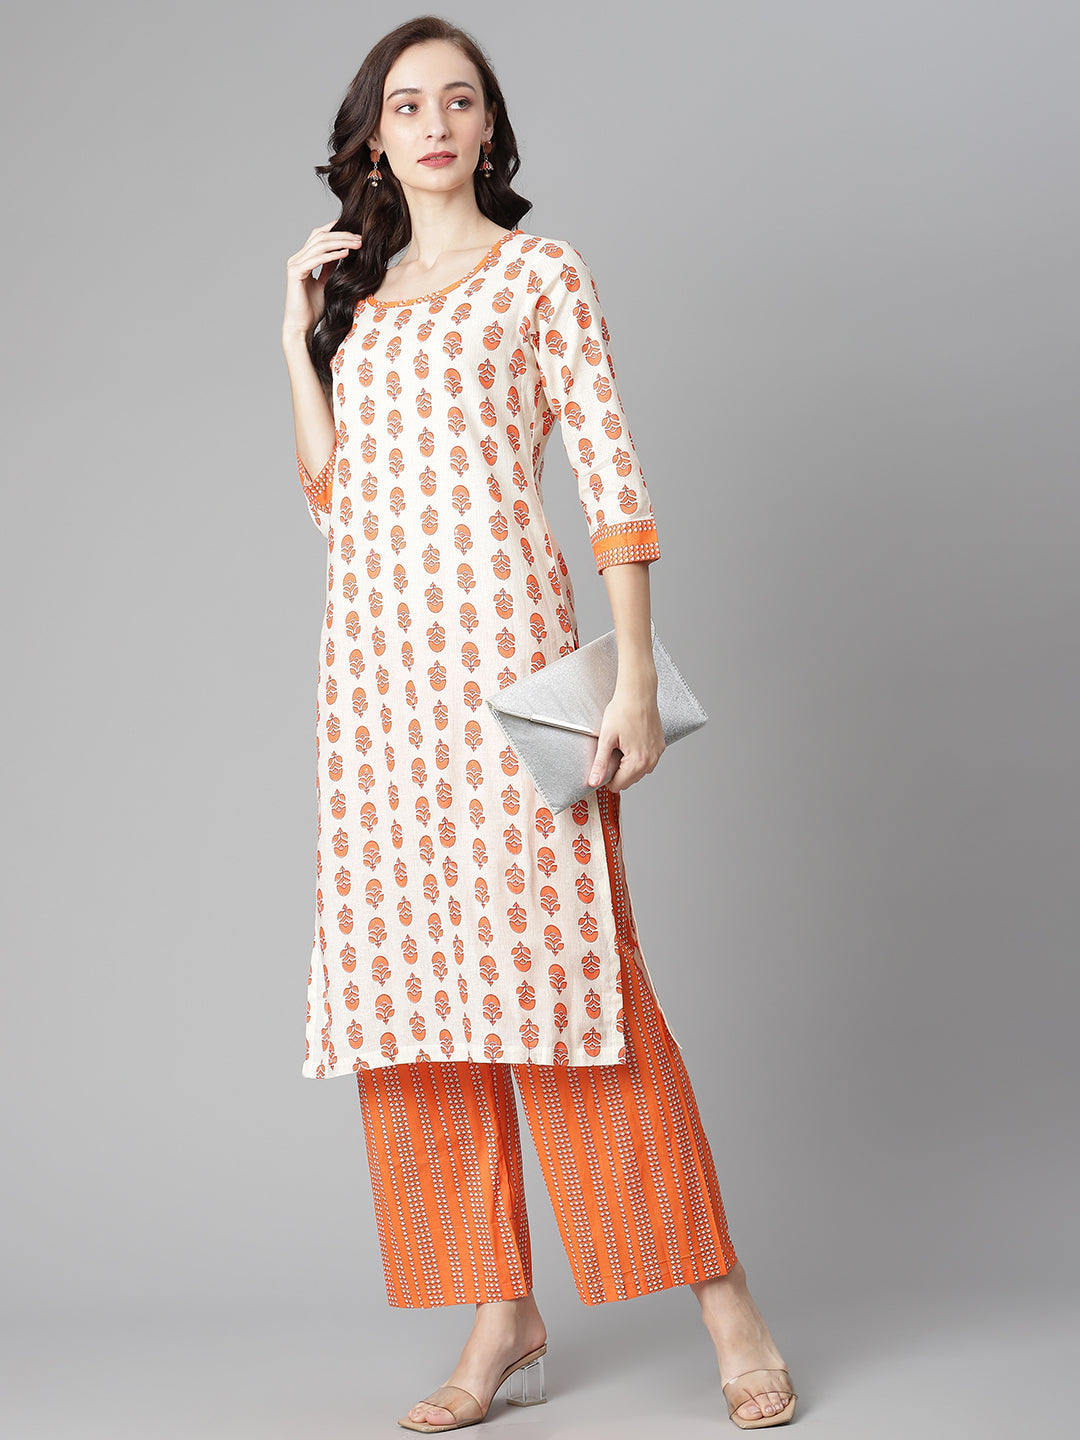 Women's Off-White-Orange Cotton Print Straight Kurta With Palazzo - Noz2Toz